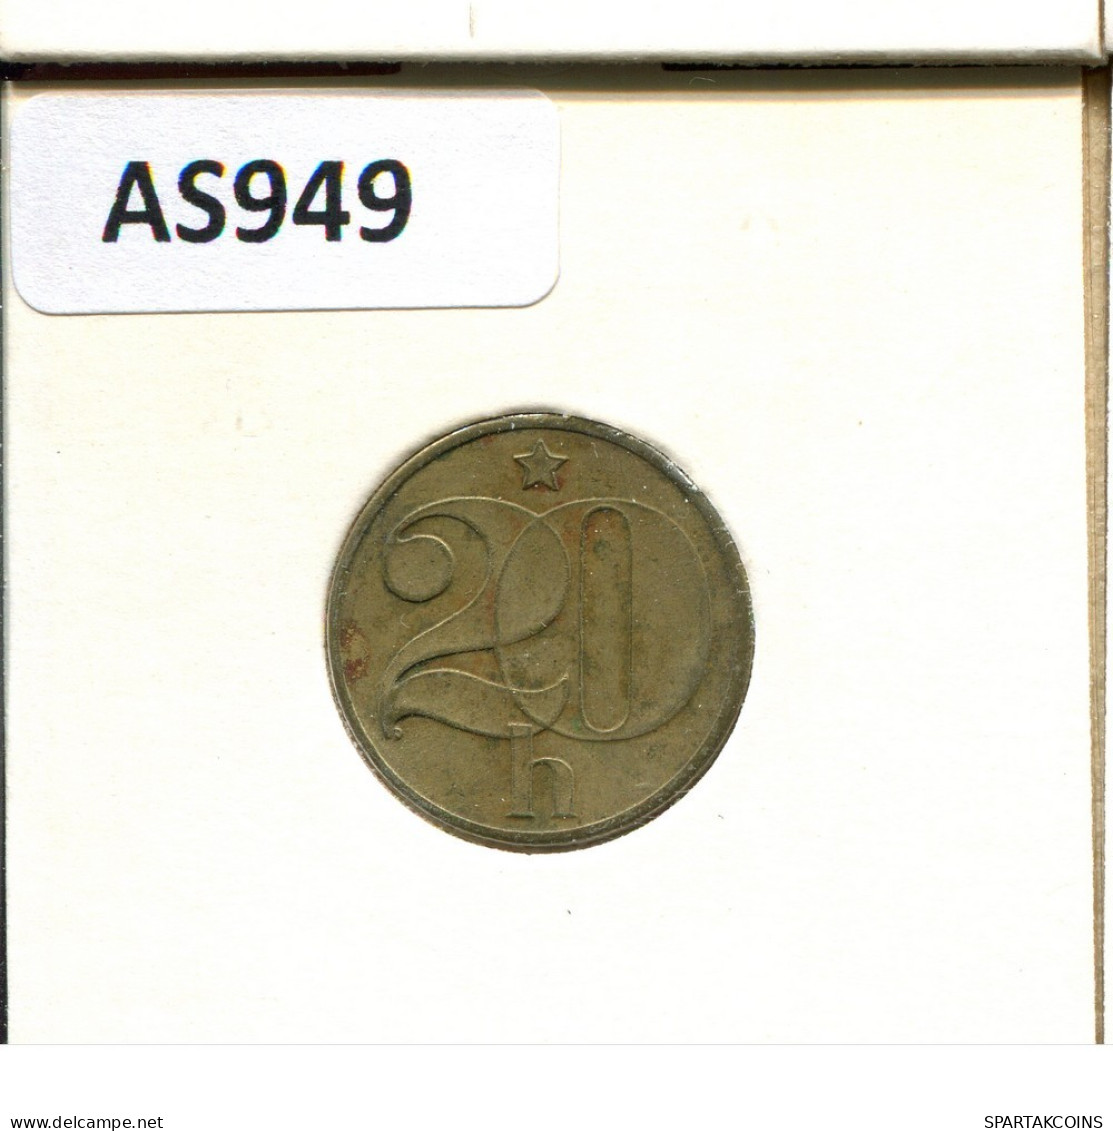 20 HALERU 1983 CZECHOSLOVAKIA Coin #AS949.U.A - Czechoslovakia